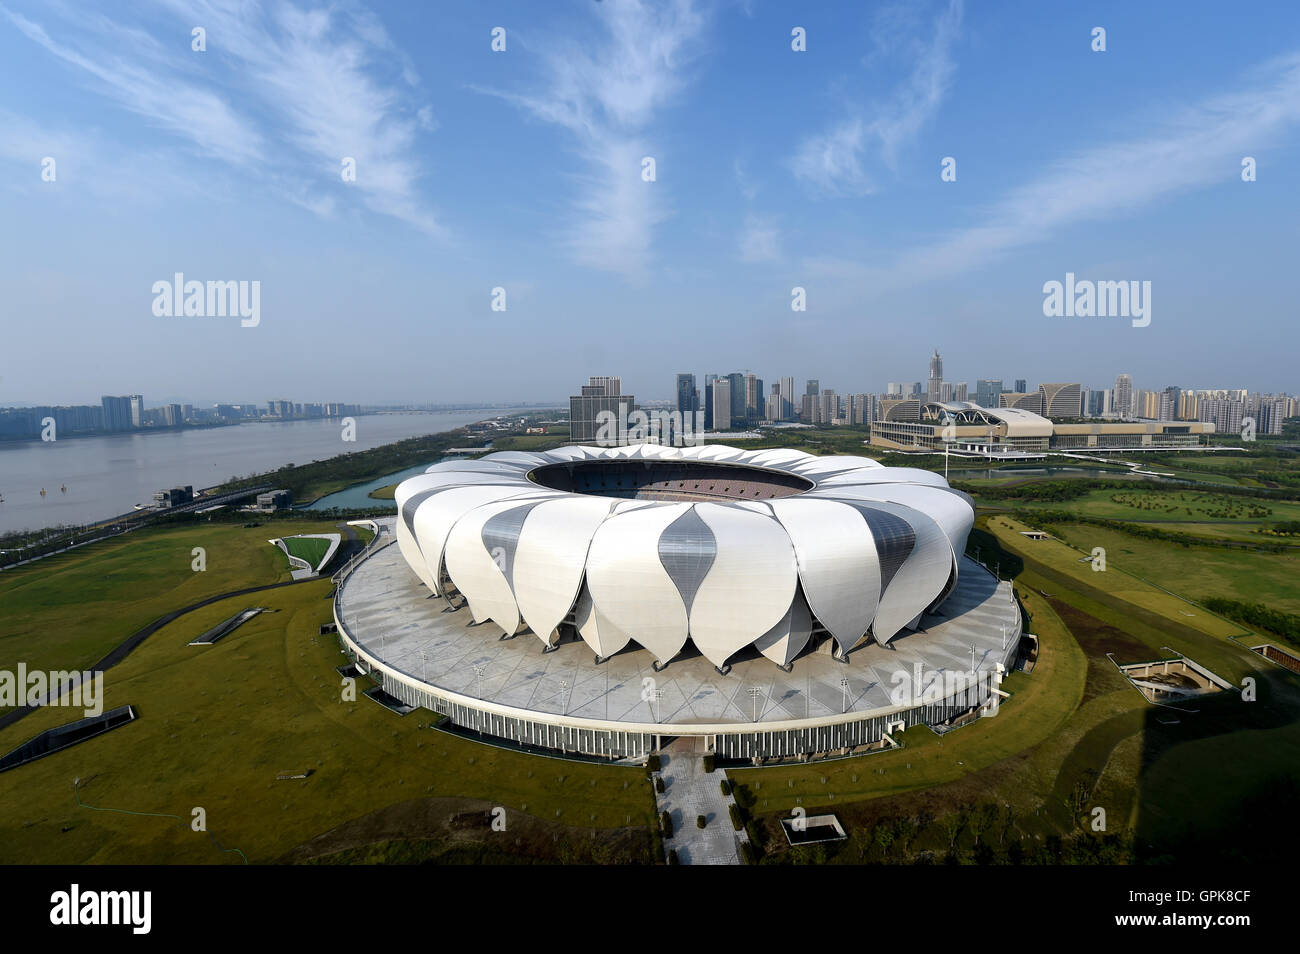 hangzhou-2nd-sep-2016-photo-taken-on-sept-2-2016-shows-the-stadium-GPK8CF.jpg